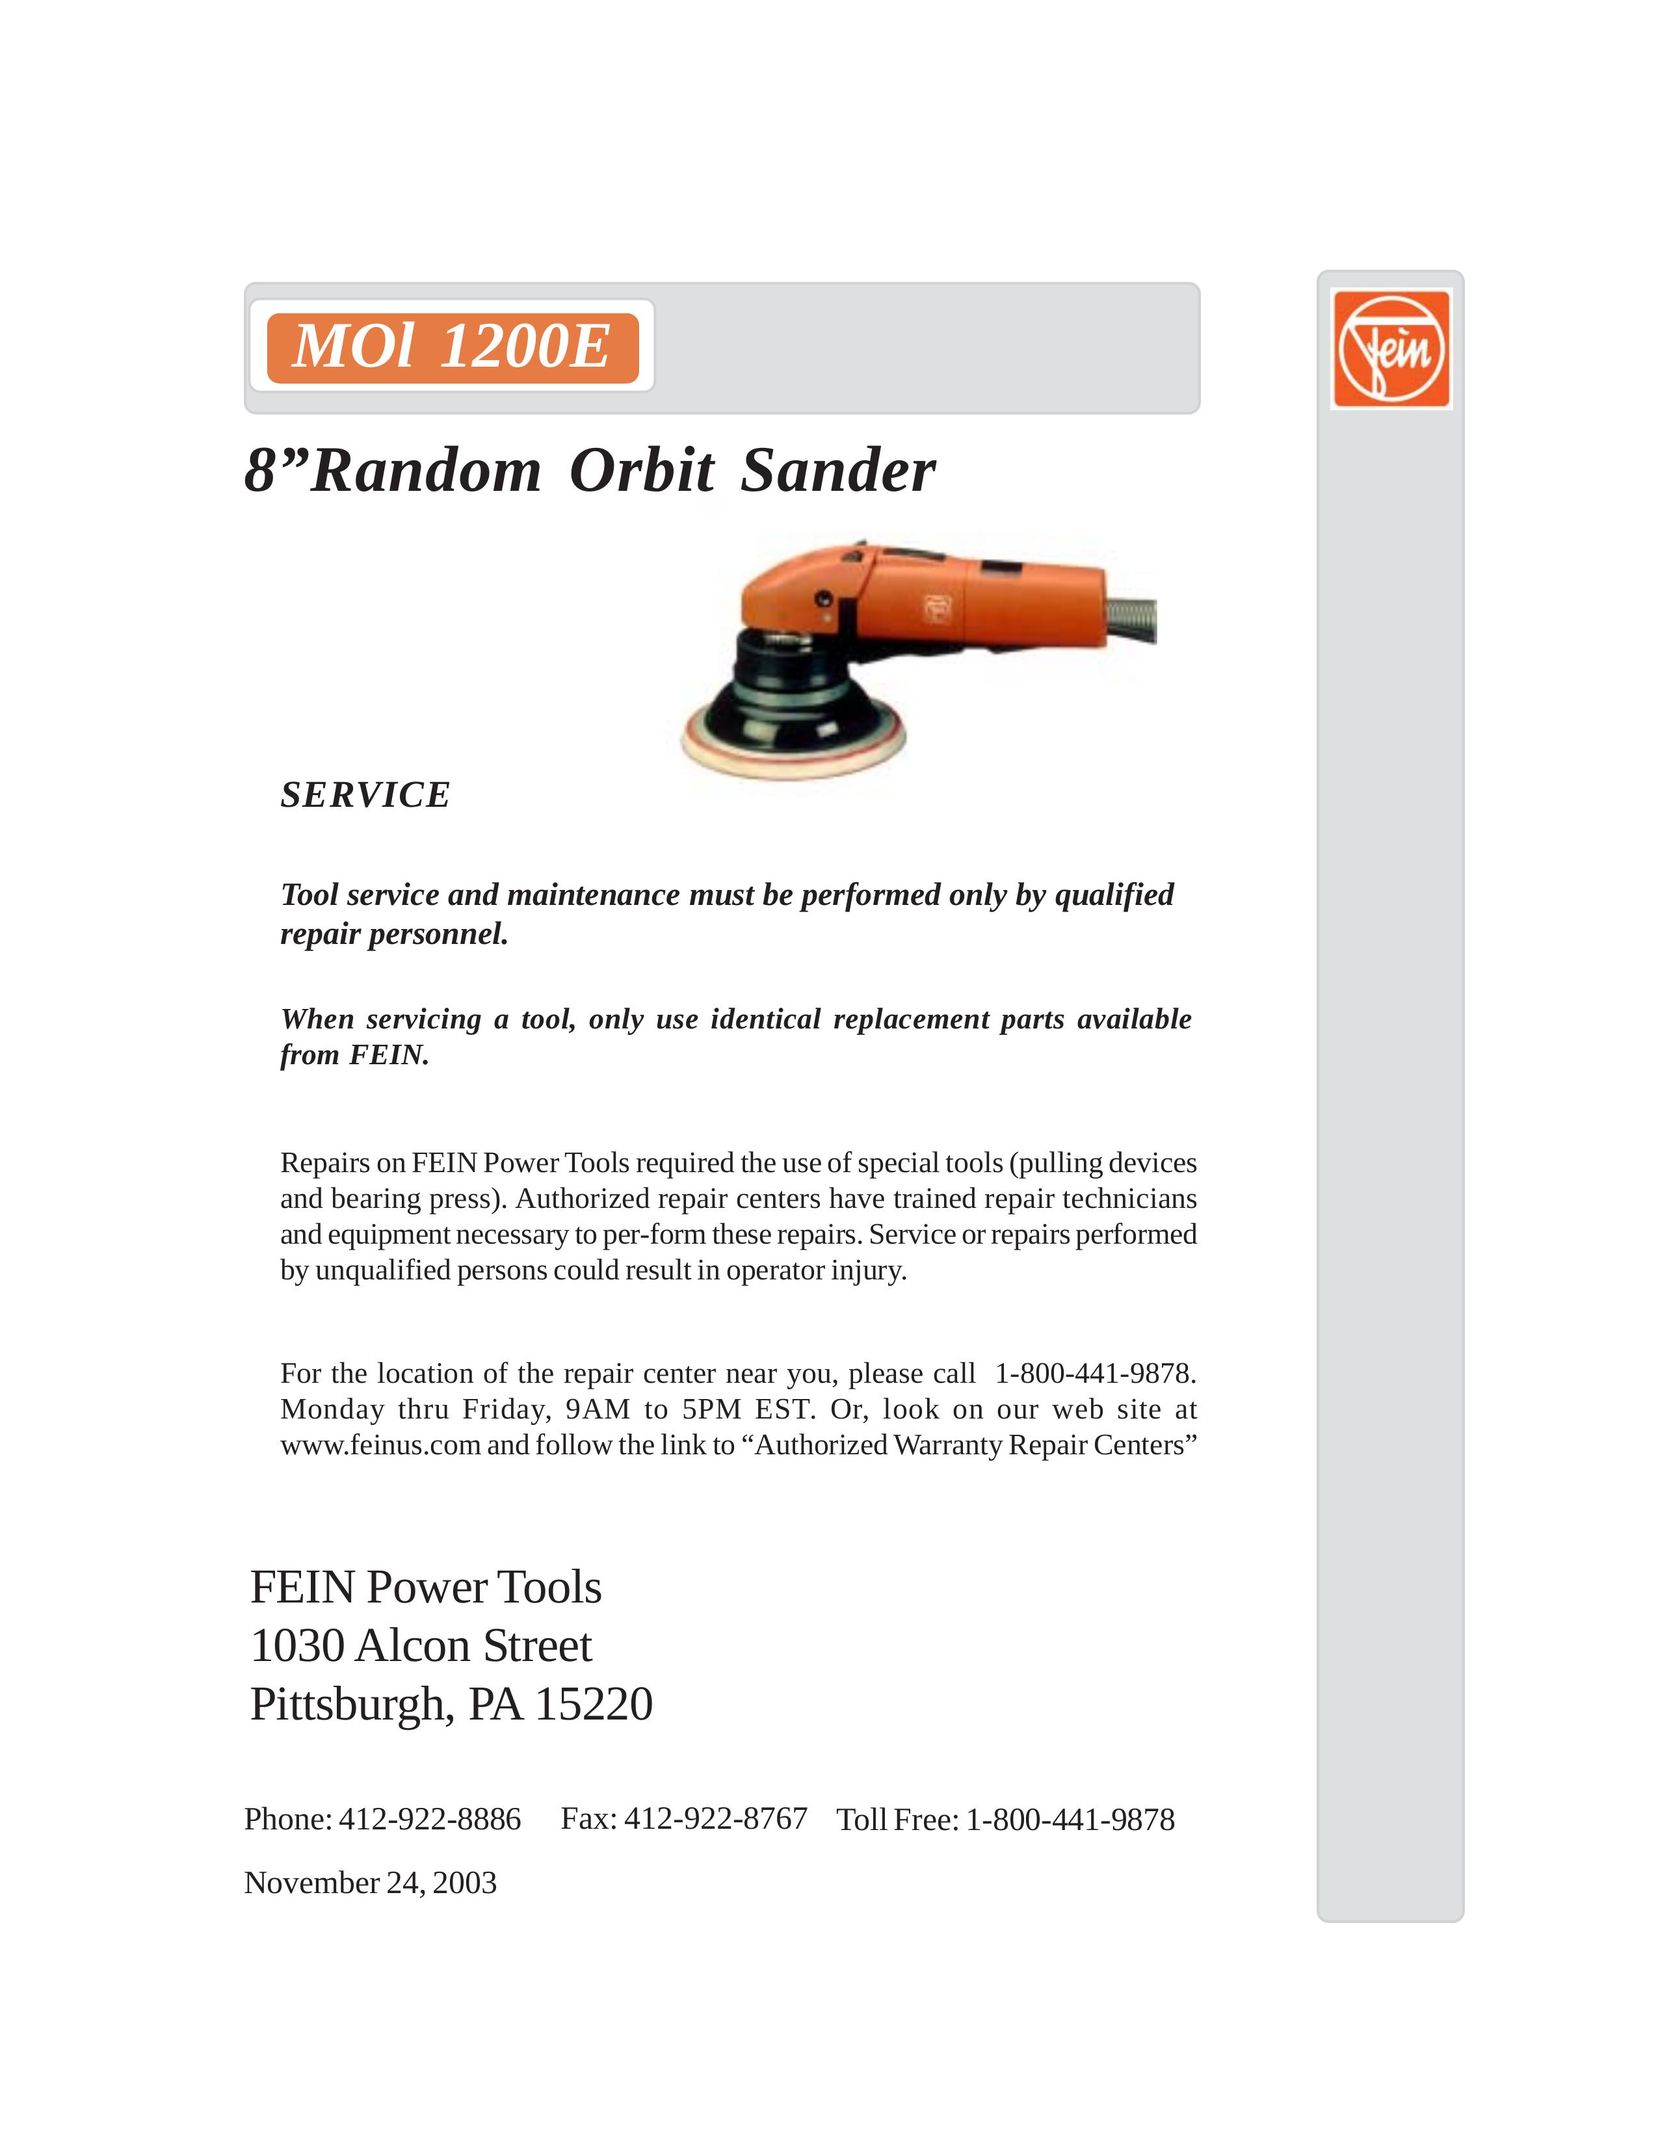 FEIN Power Tools MOL 1200E Sander User Manual